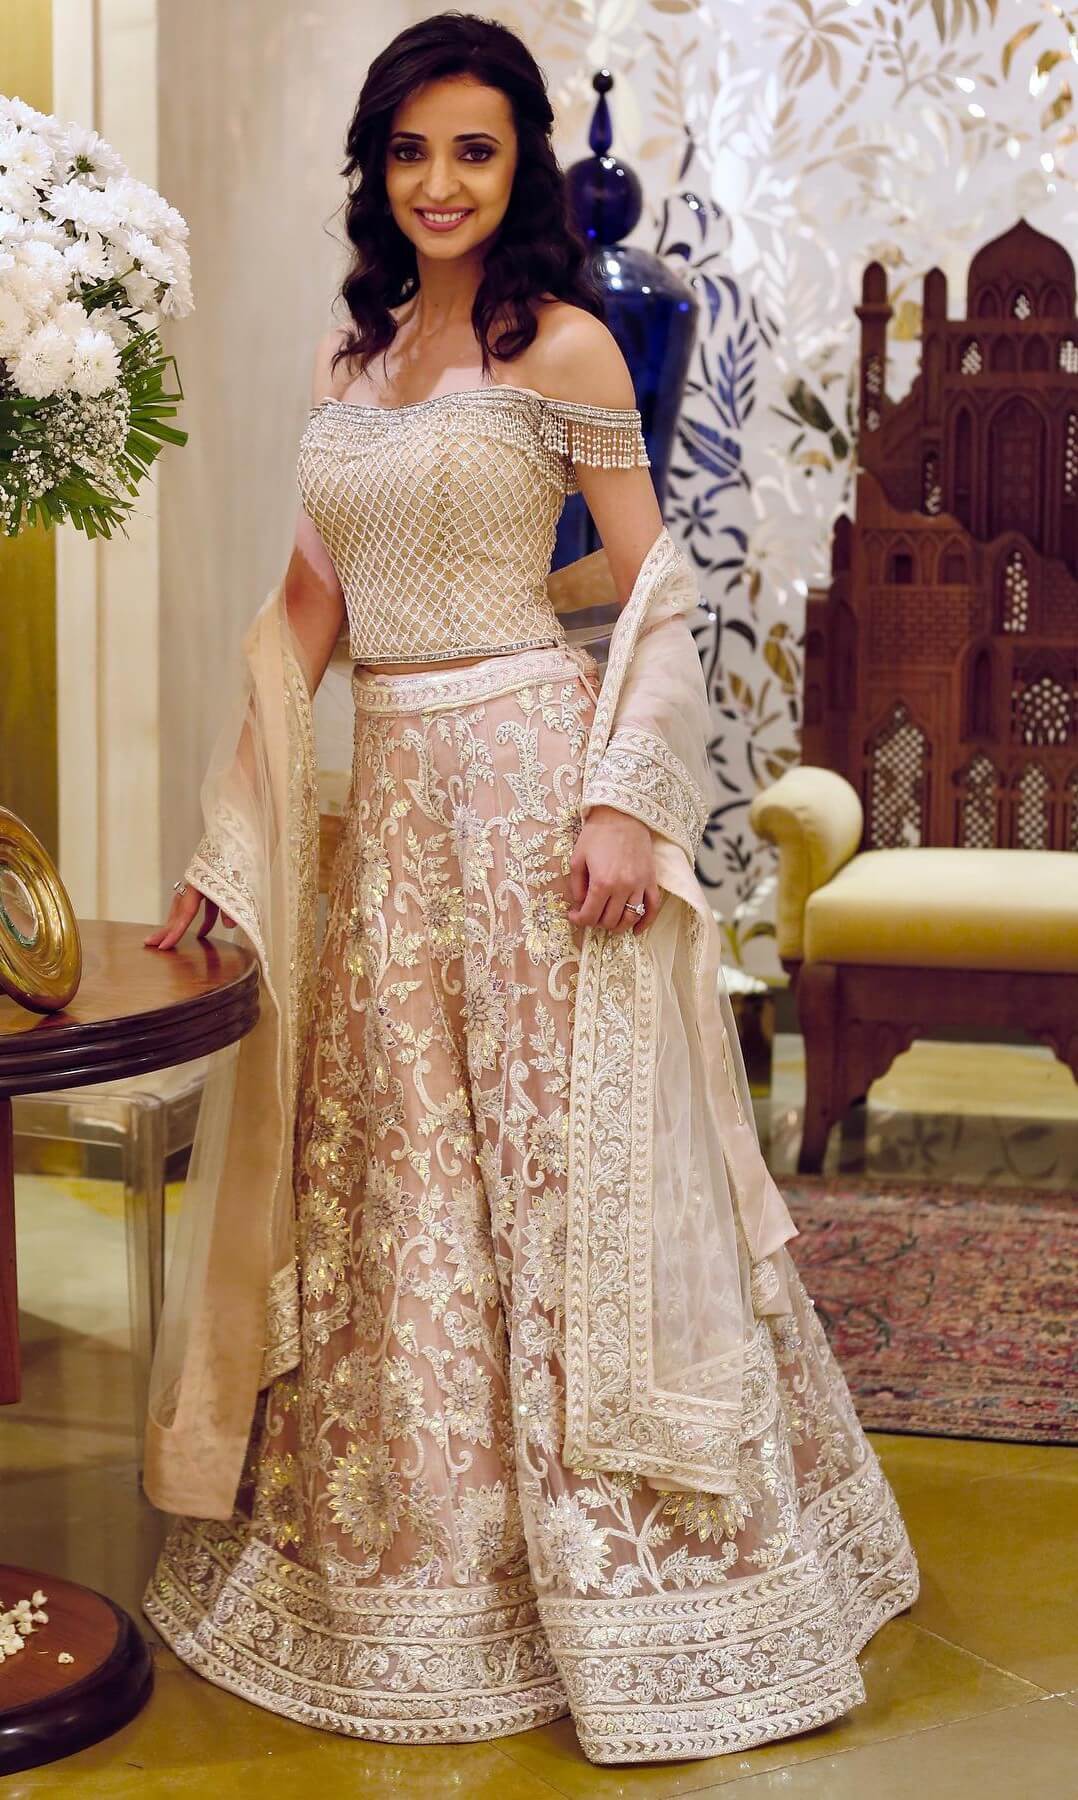 Sanaya Irani Princess Look In Beige Off-Shoulder Heavy Embroidered Blouse